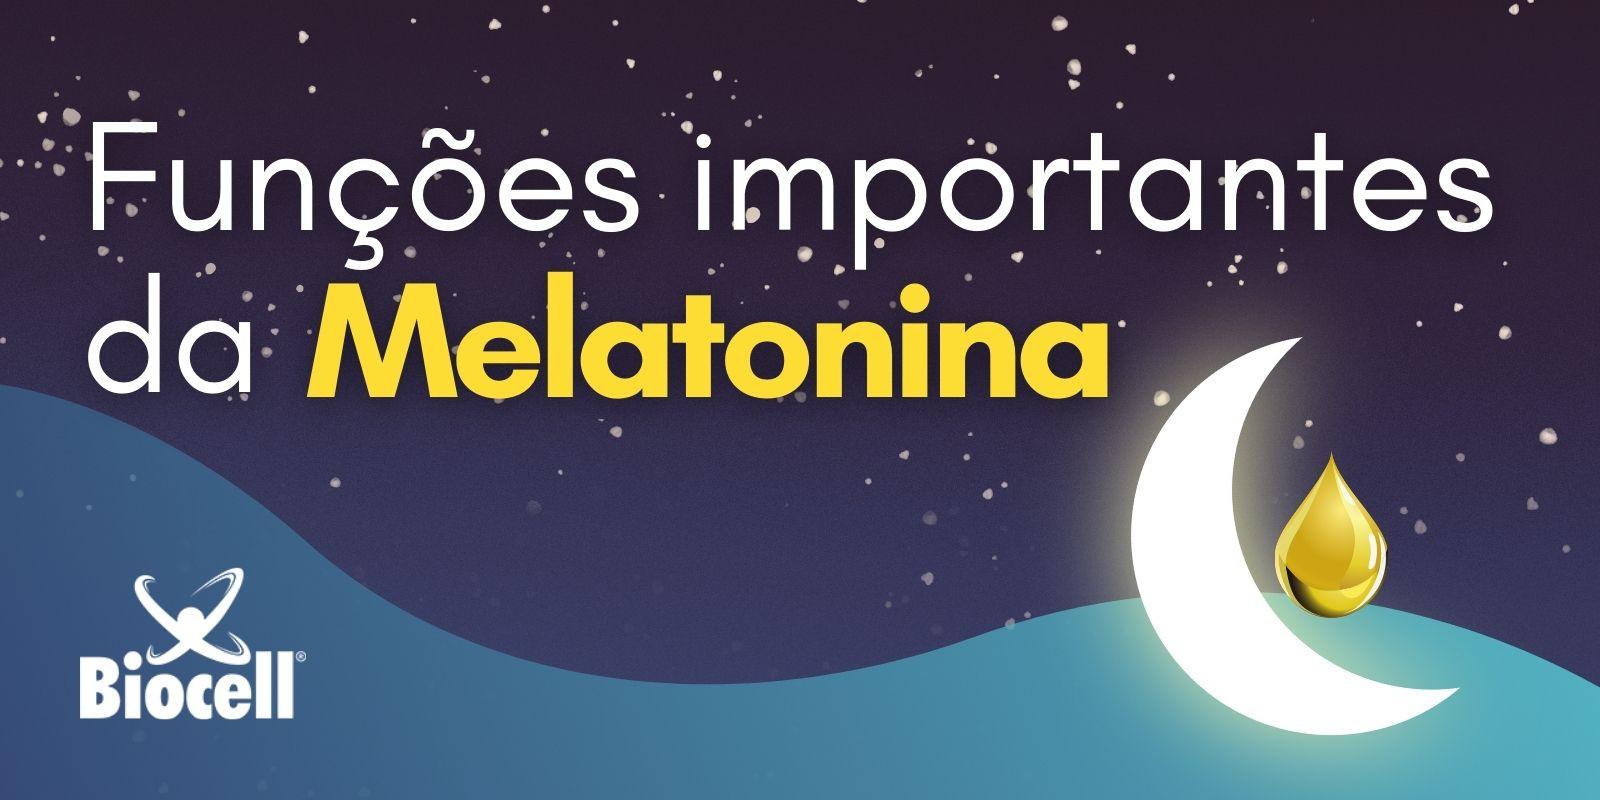 Funções importantes da Melatonina